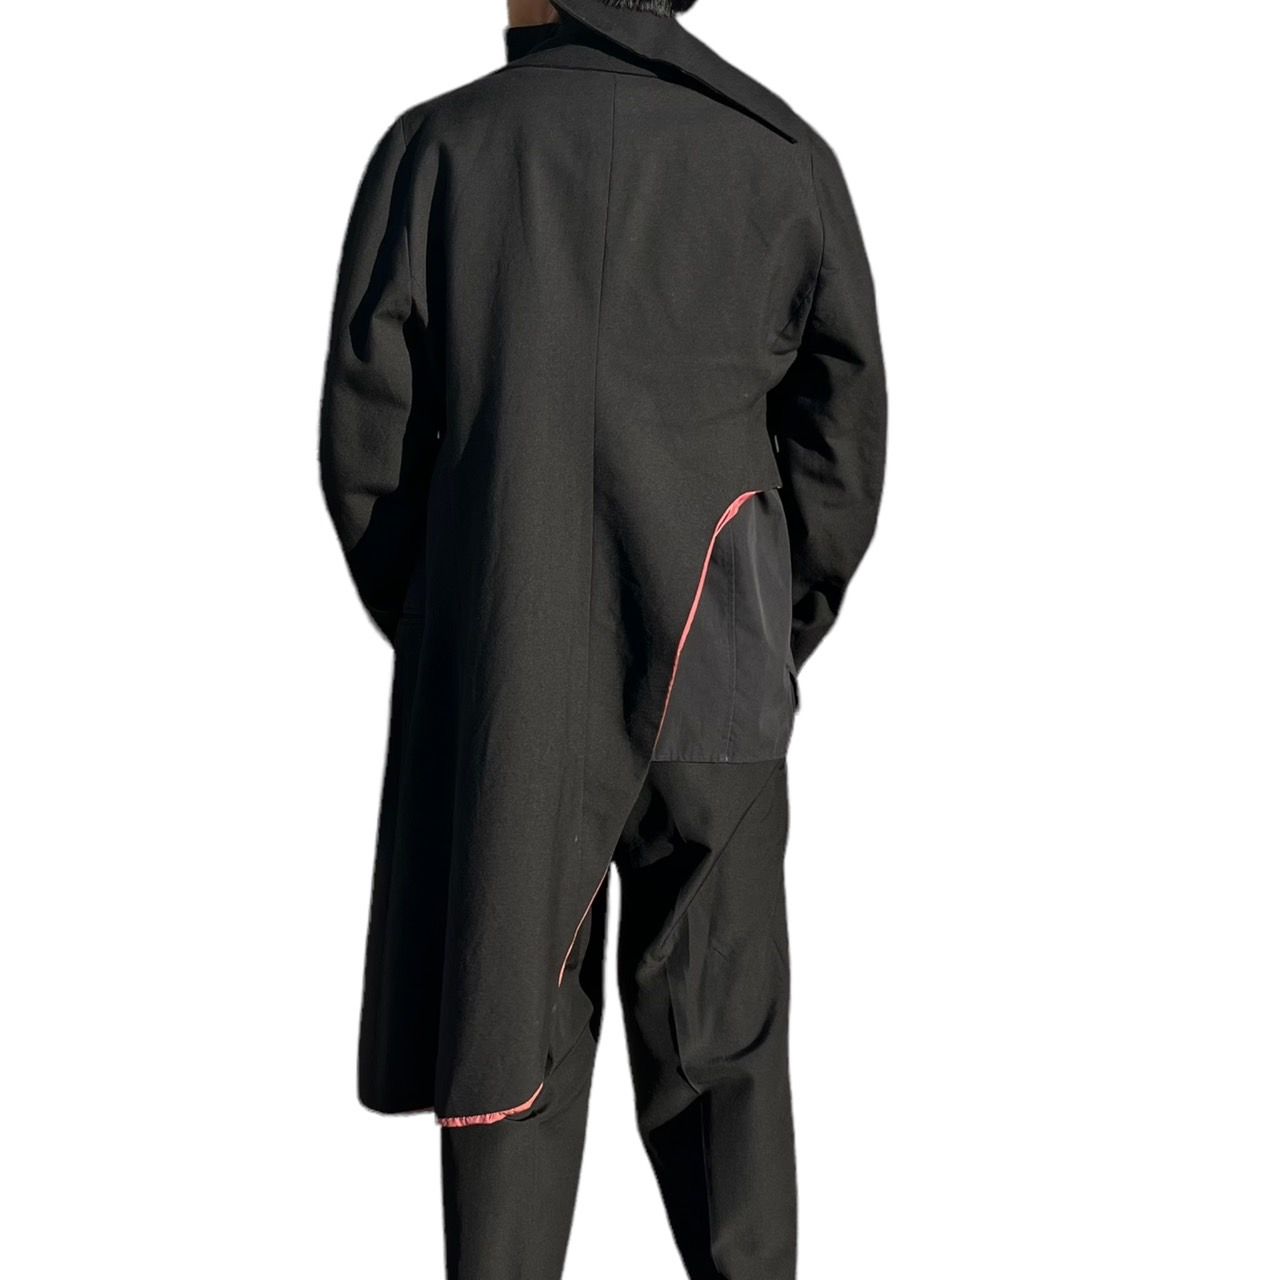 MASAKI MATSUSHIMA(マサキマツシマ) 90~00's asymmetric deformed wool  jacket/アシンメトリー変形ウールジャケット MHSC-3003 SIZE 3(L) ブラック×グレー